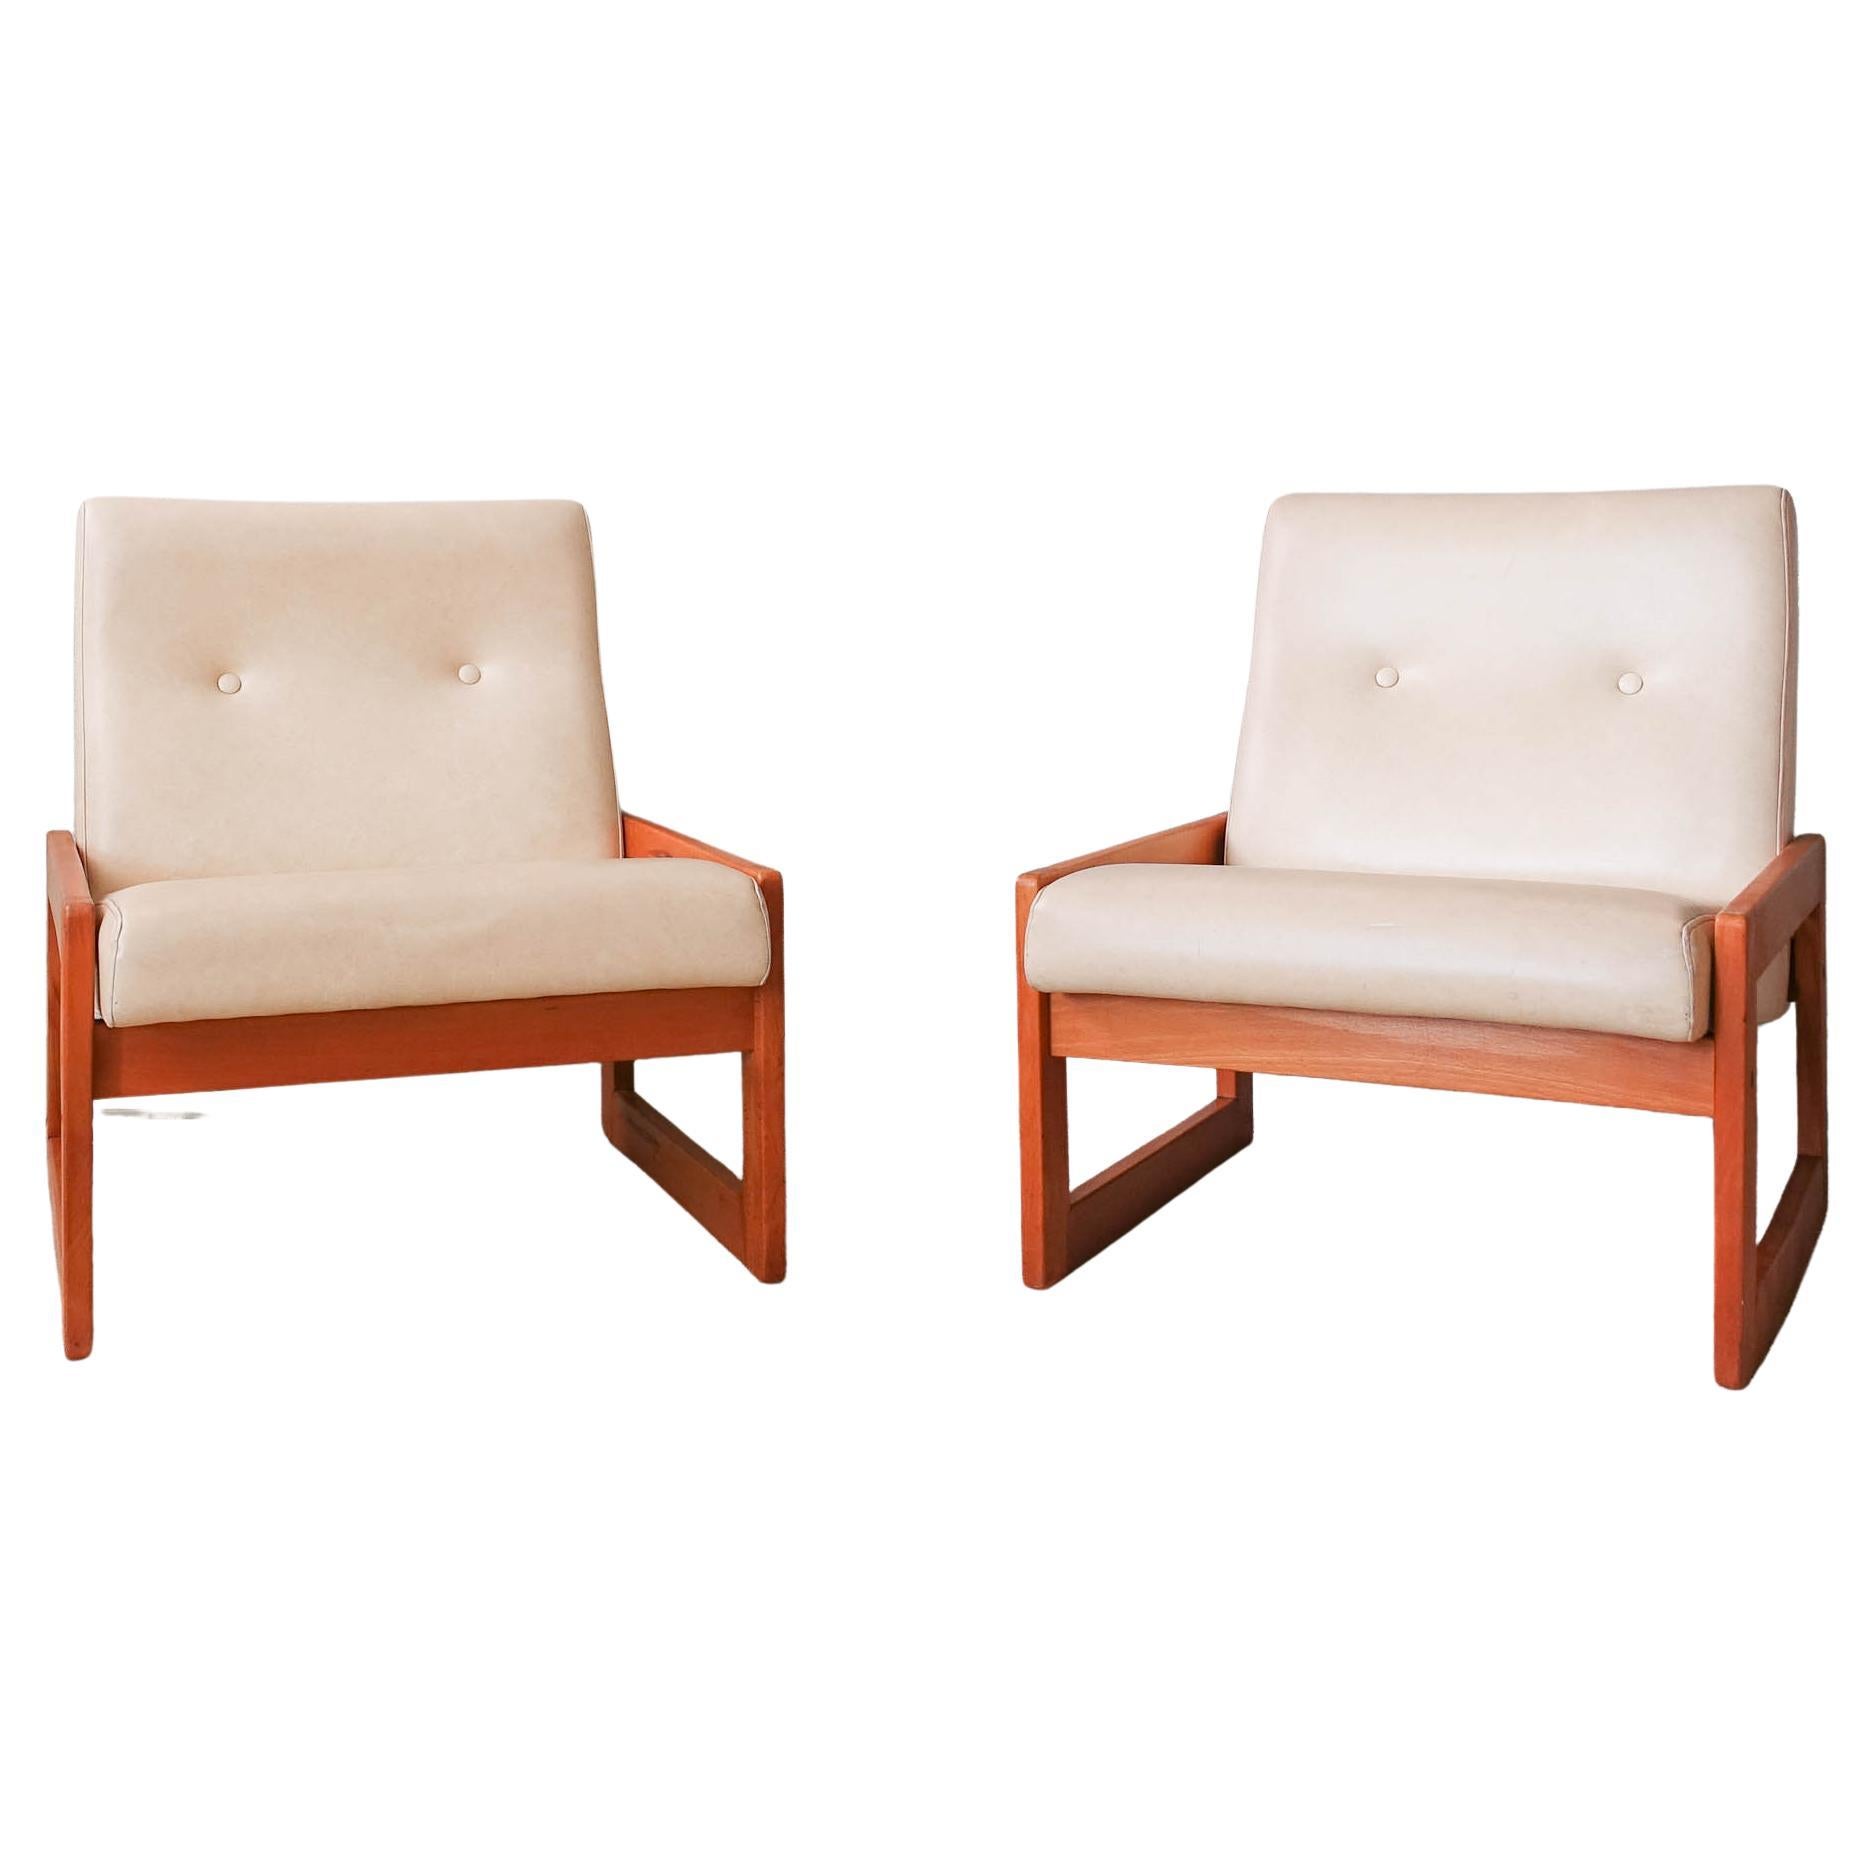 Pair of Easy Chairs, Model Espinho, by José Espinho for Olaio, 1973